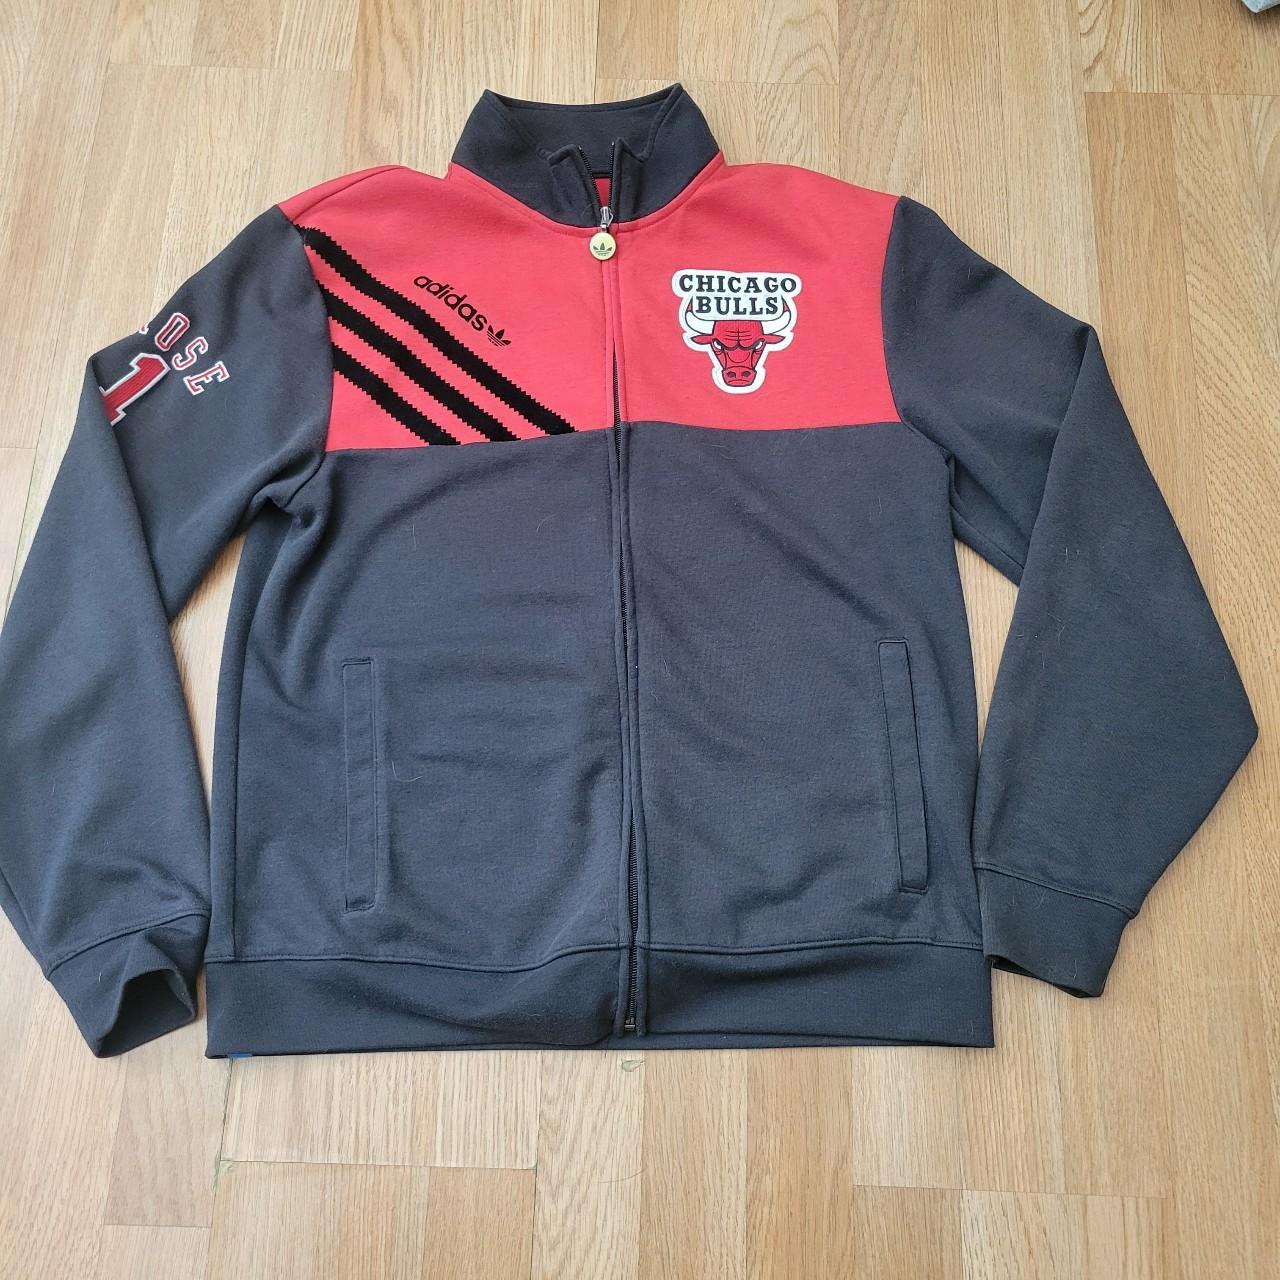 Adidas Chicago Bulls Derrick Rose Full Zip Jacket Black Red Size Medium